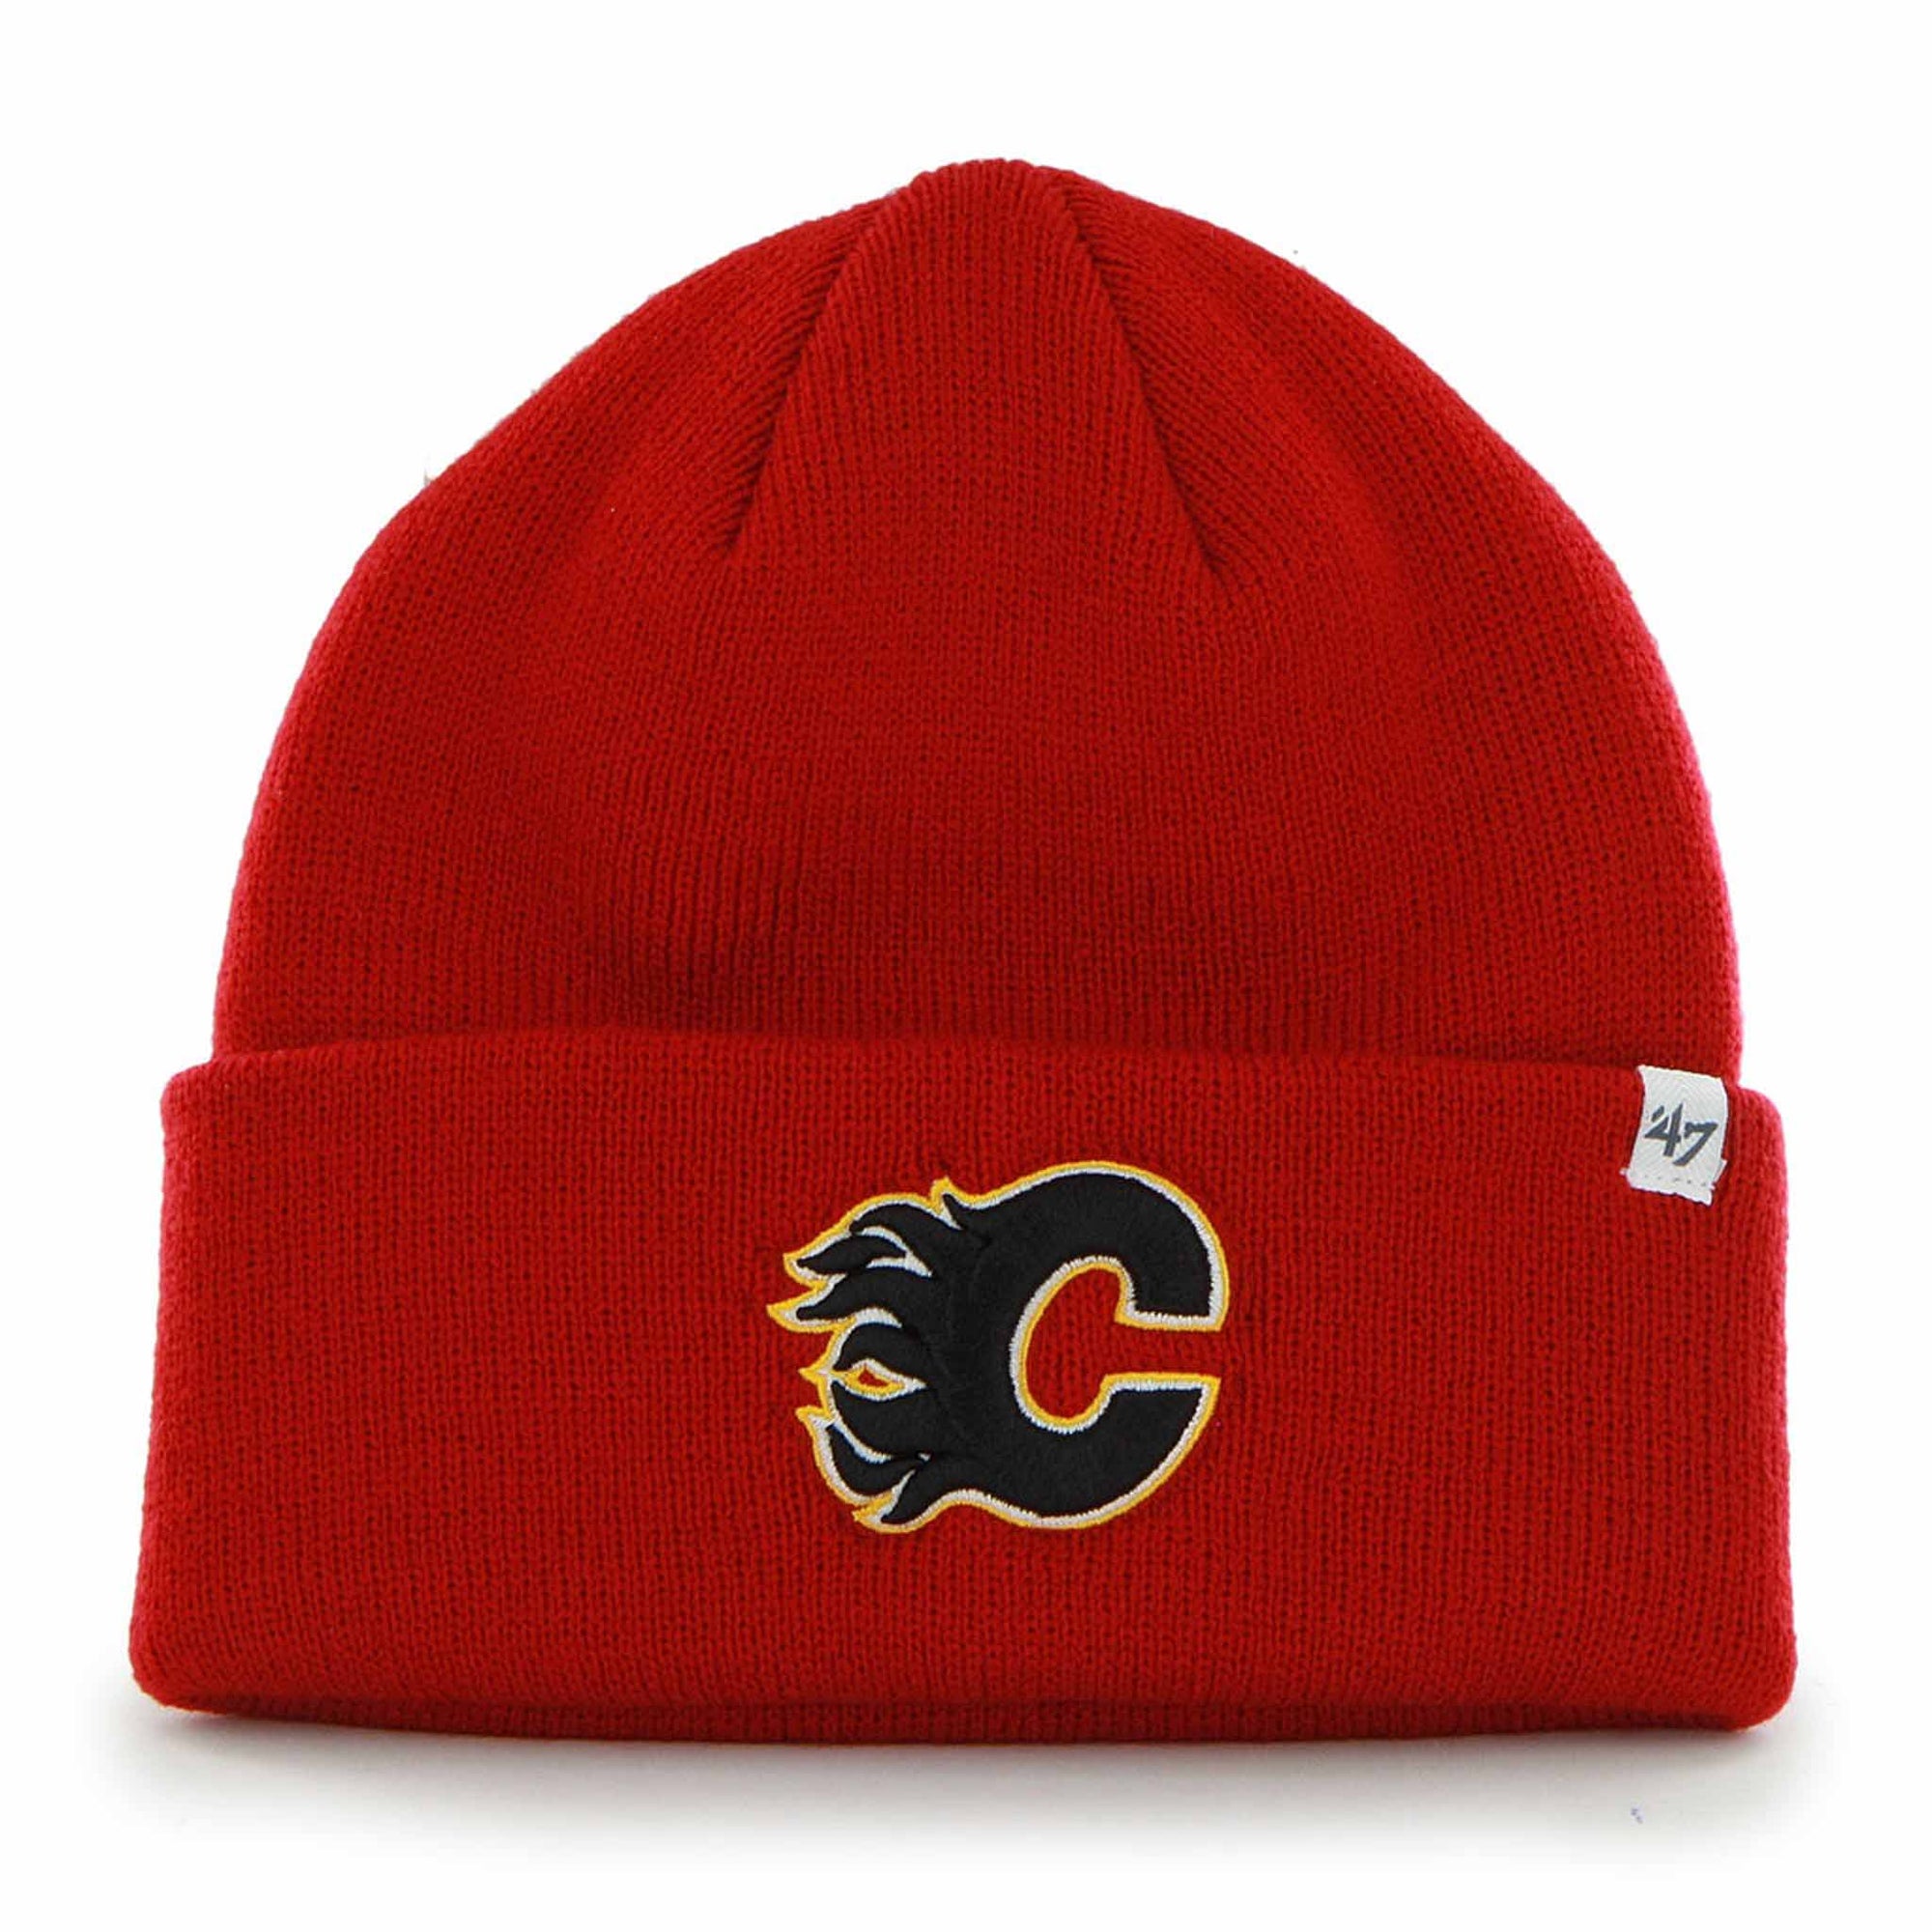 Tuque à revers Calgary Flames NHL 47 Brand